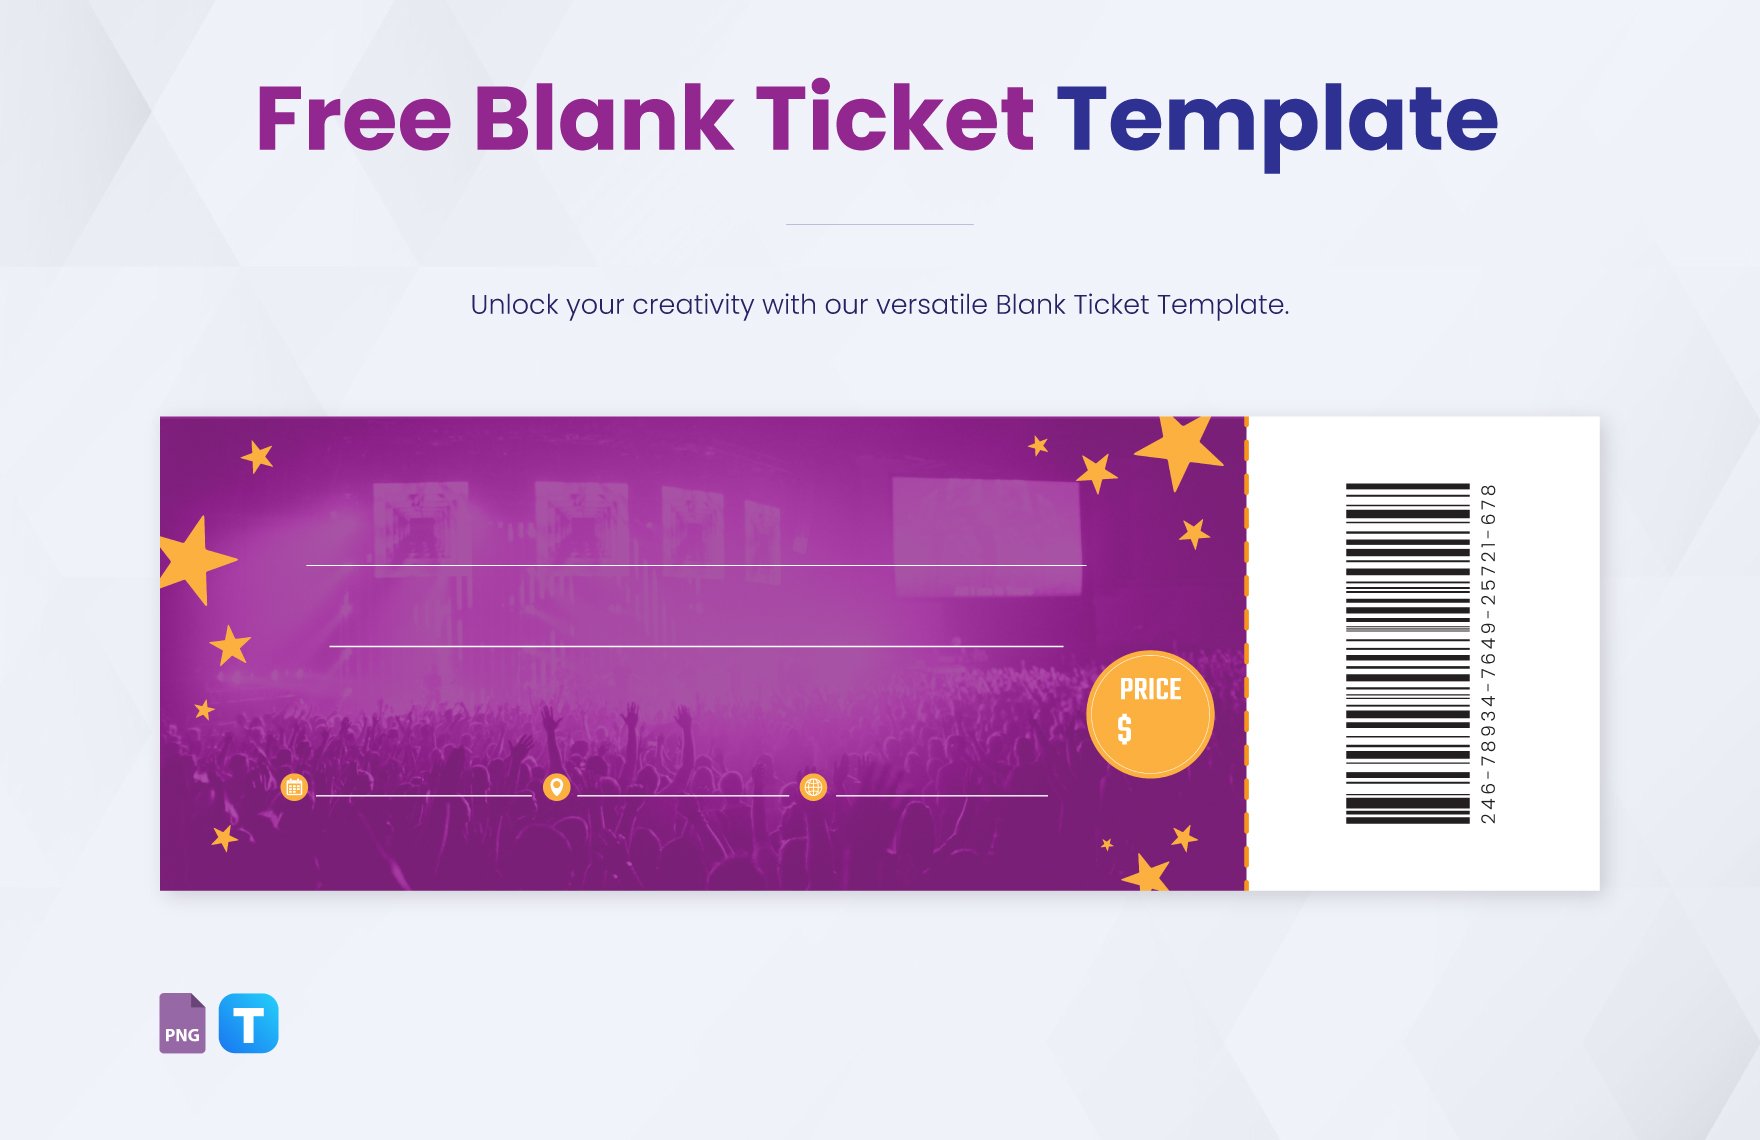 Editable Blank Ticket Template